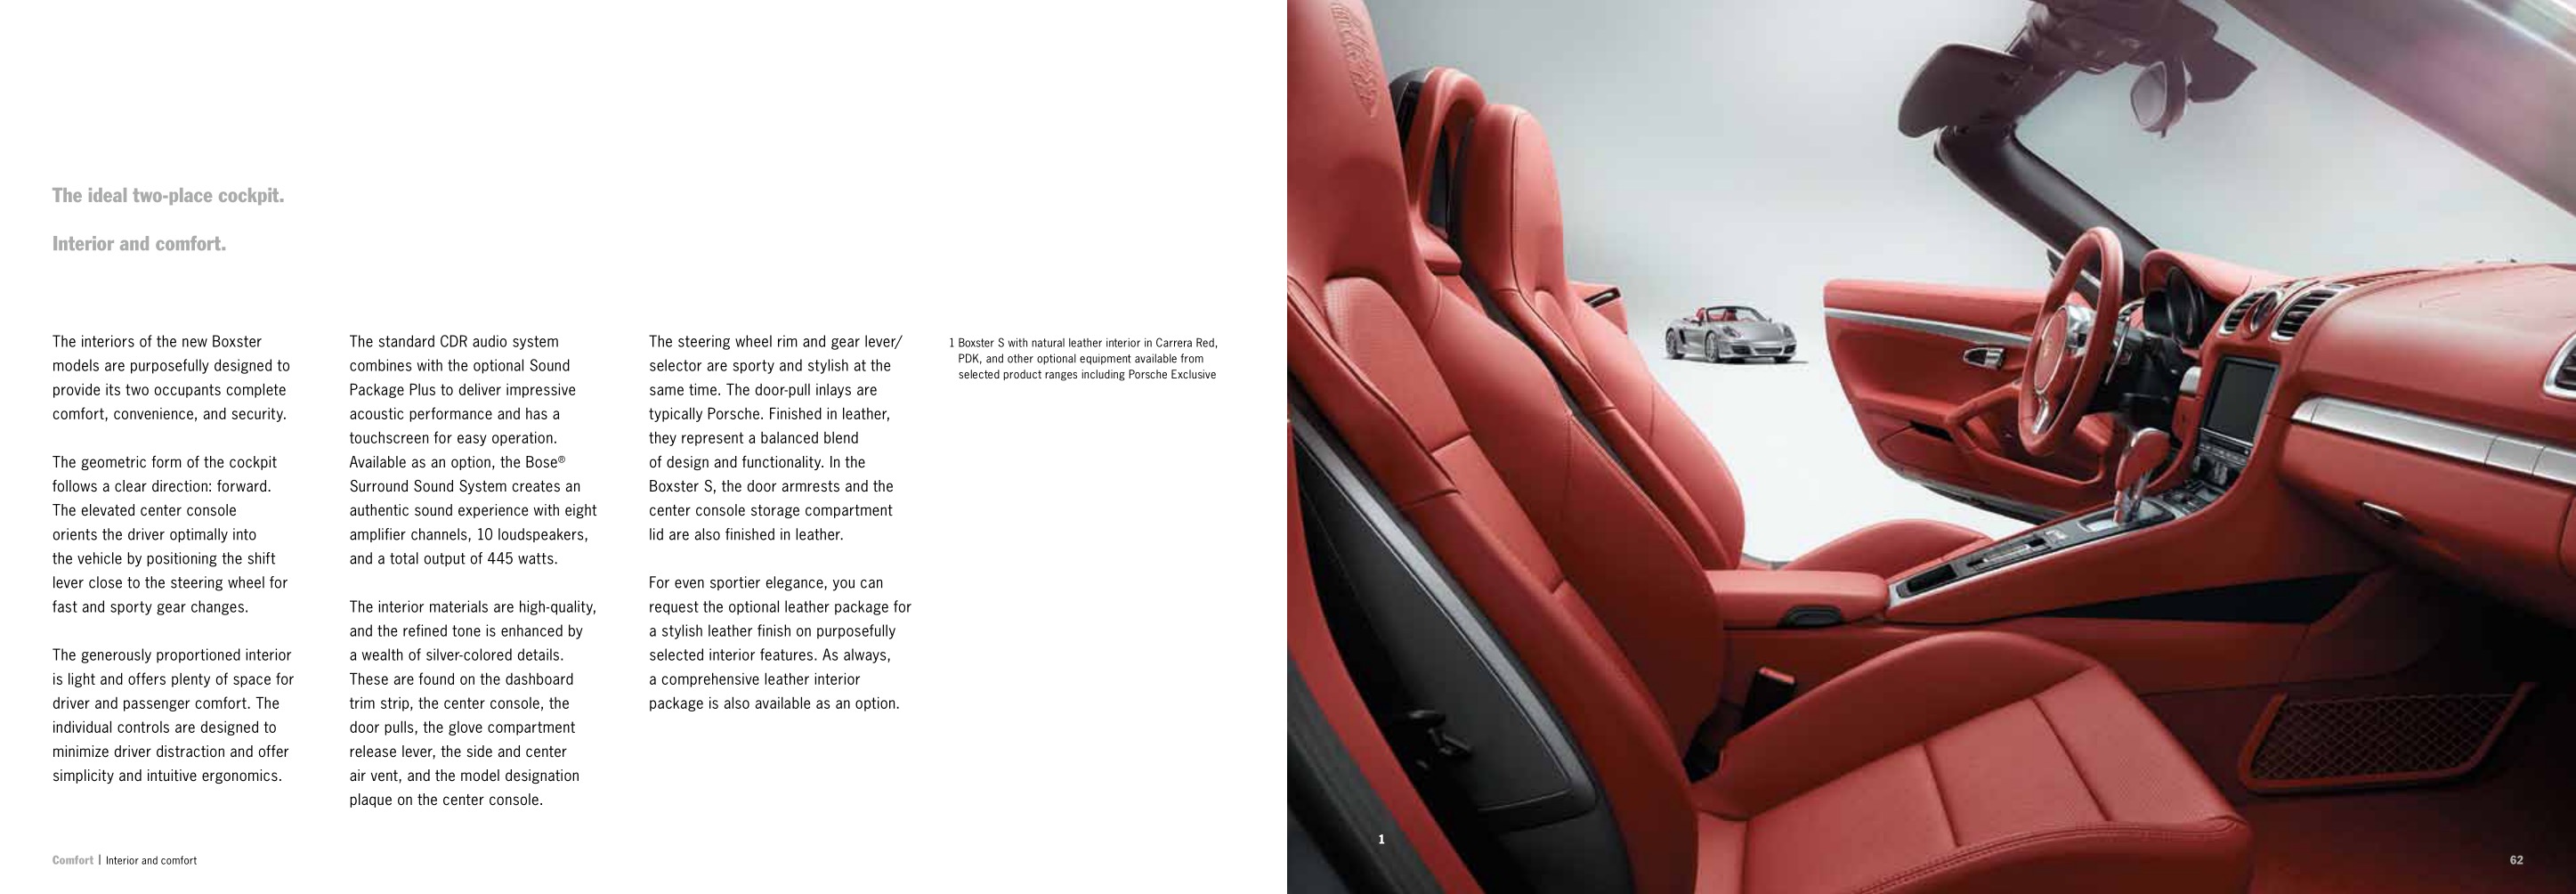 2013 Porsche Boxster Brochure Page 26